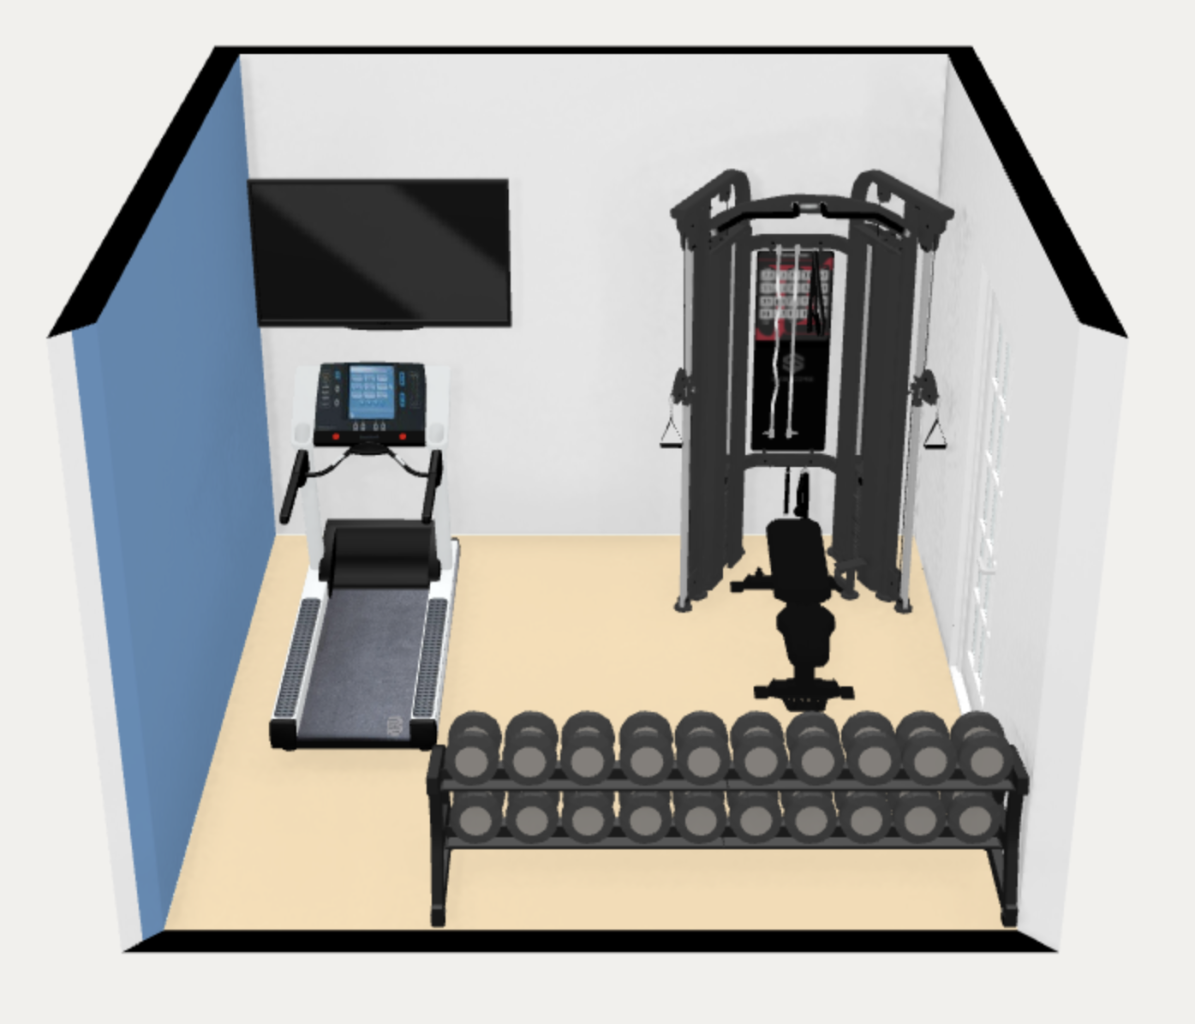 144 sqft/12'x12' home gym layout 3d